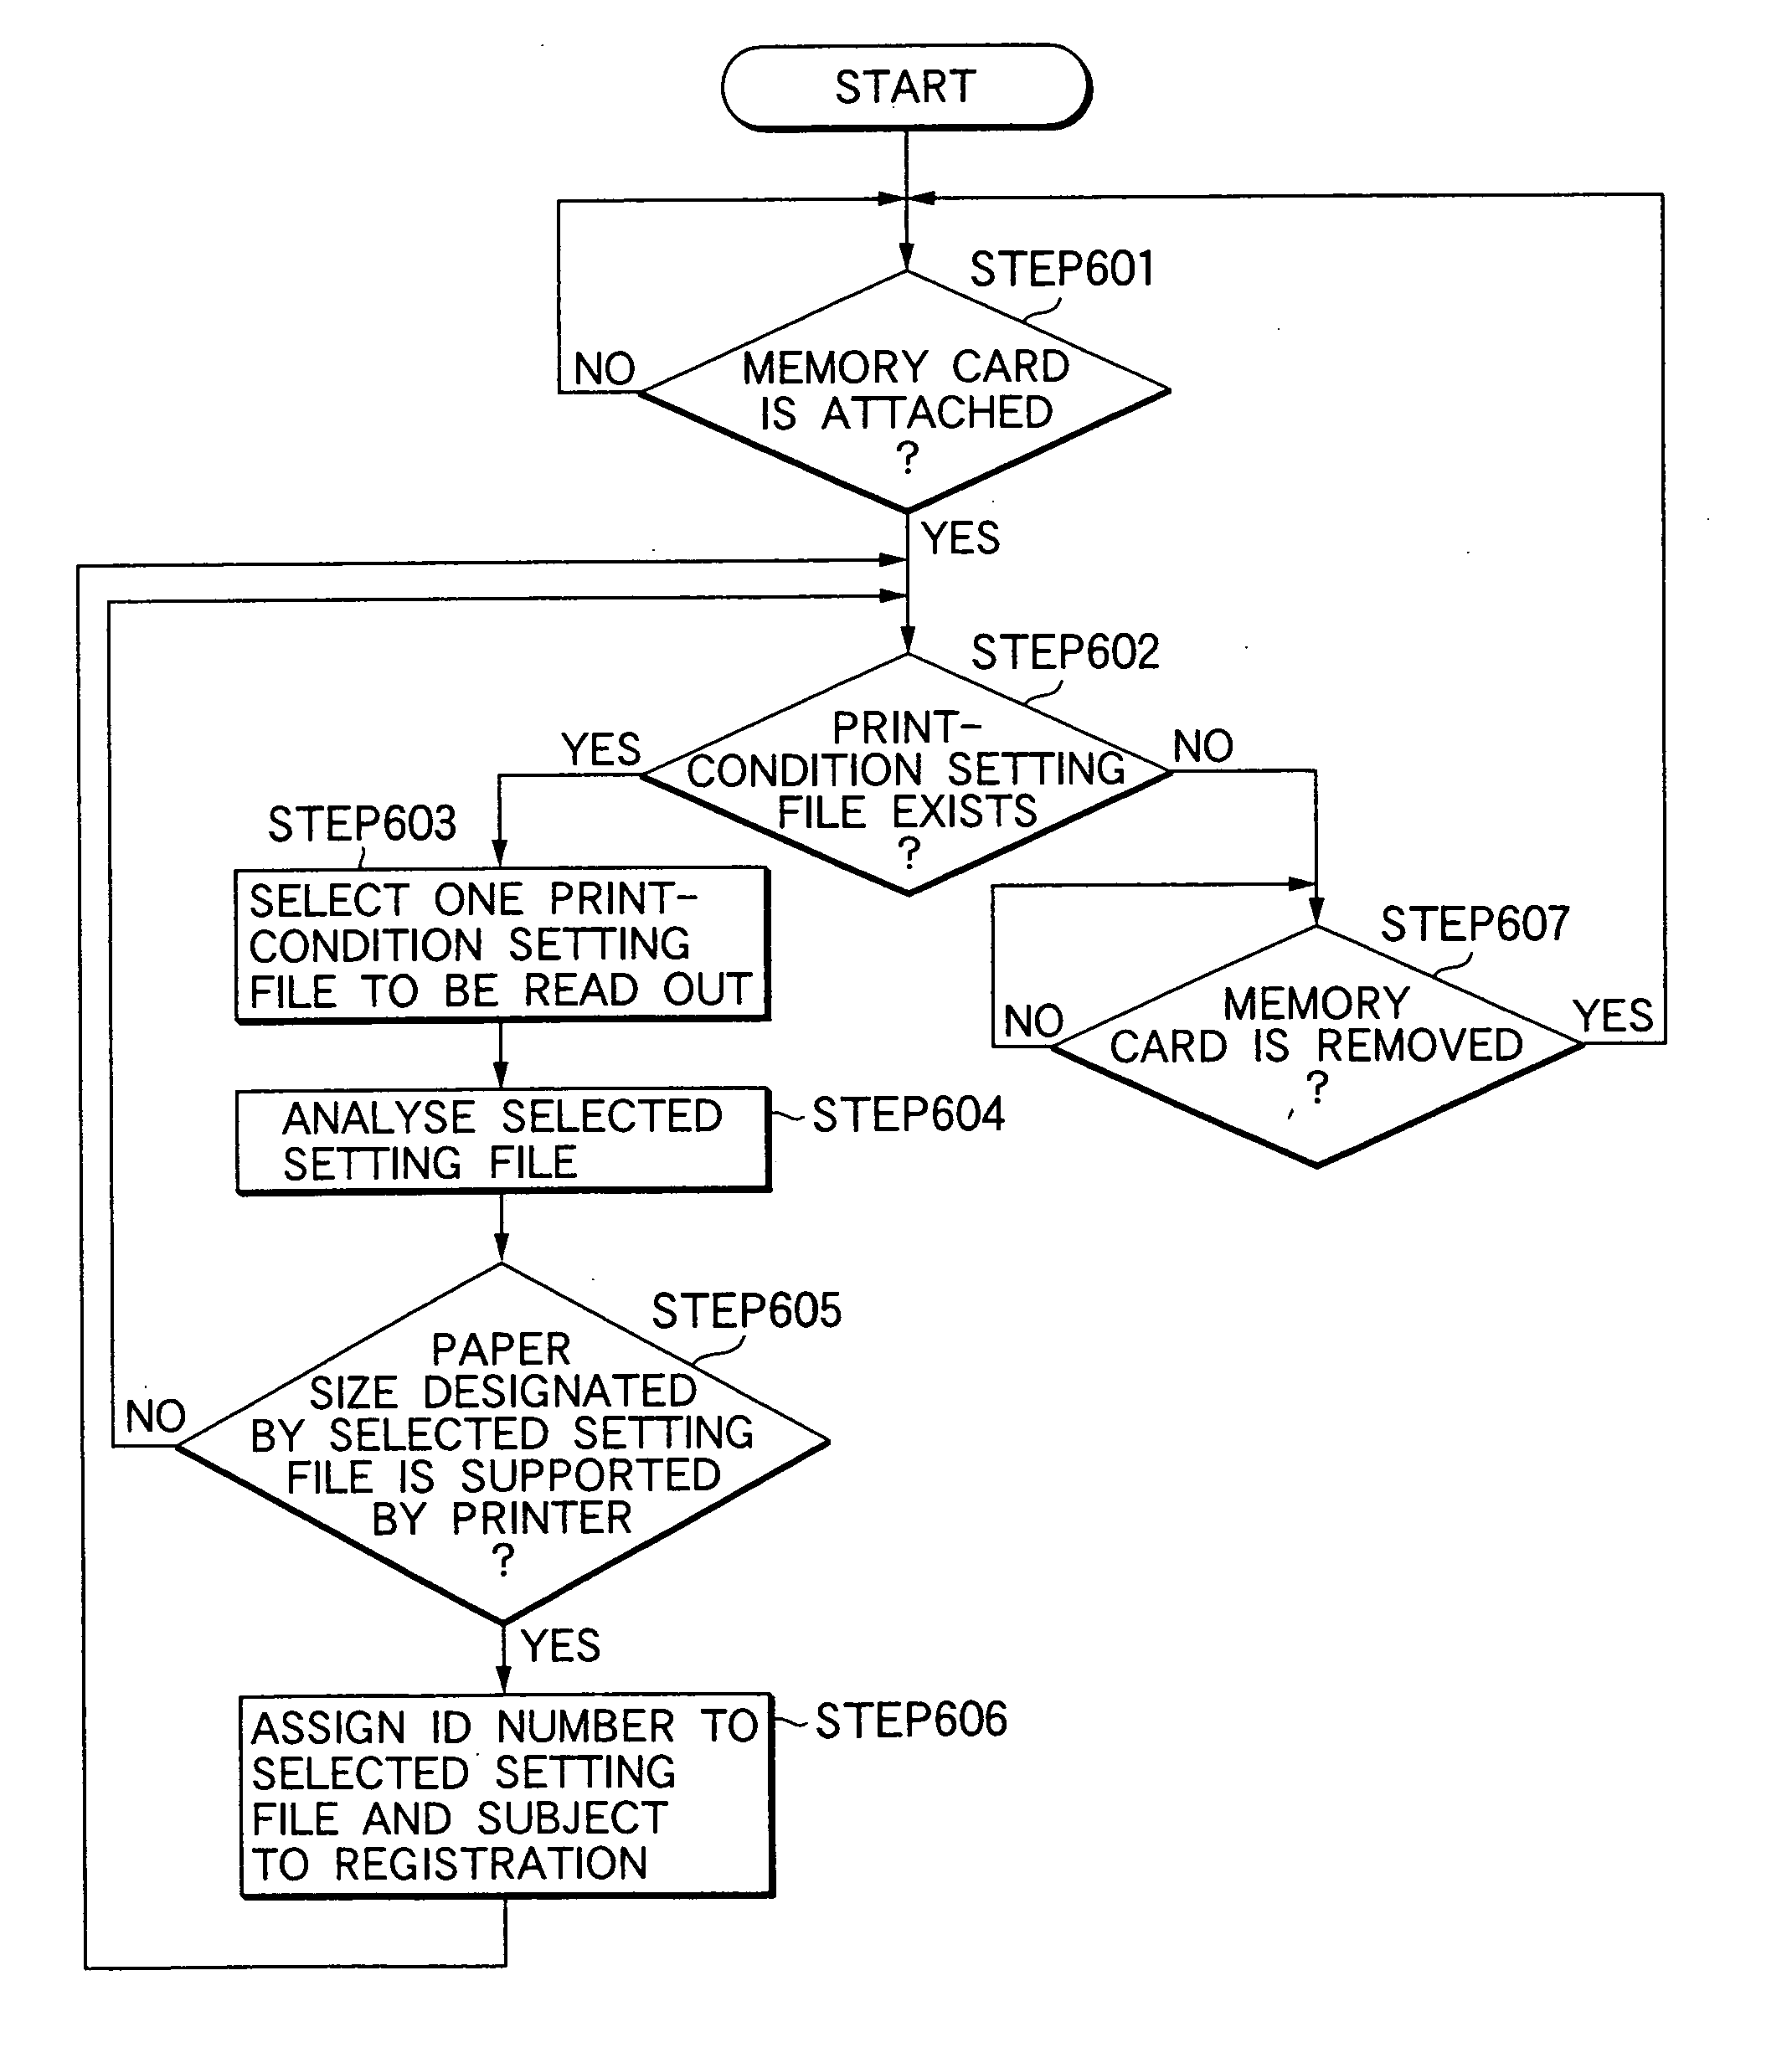 Printer and print-condition setting method for the same